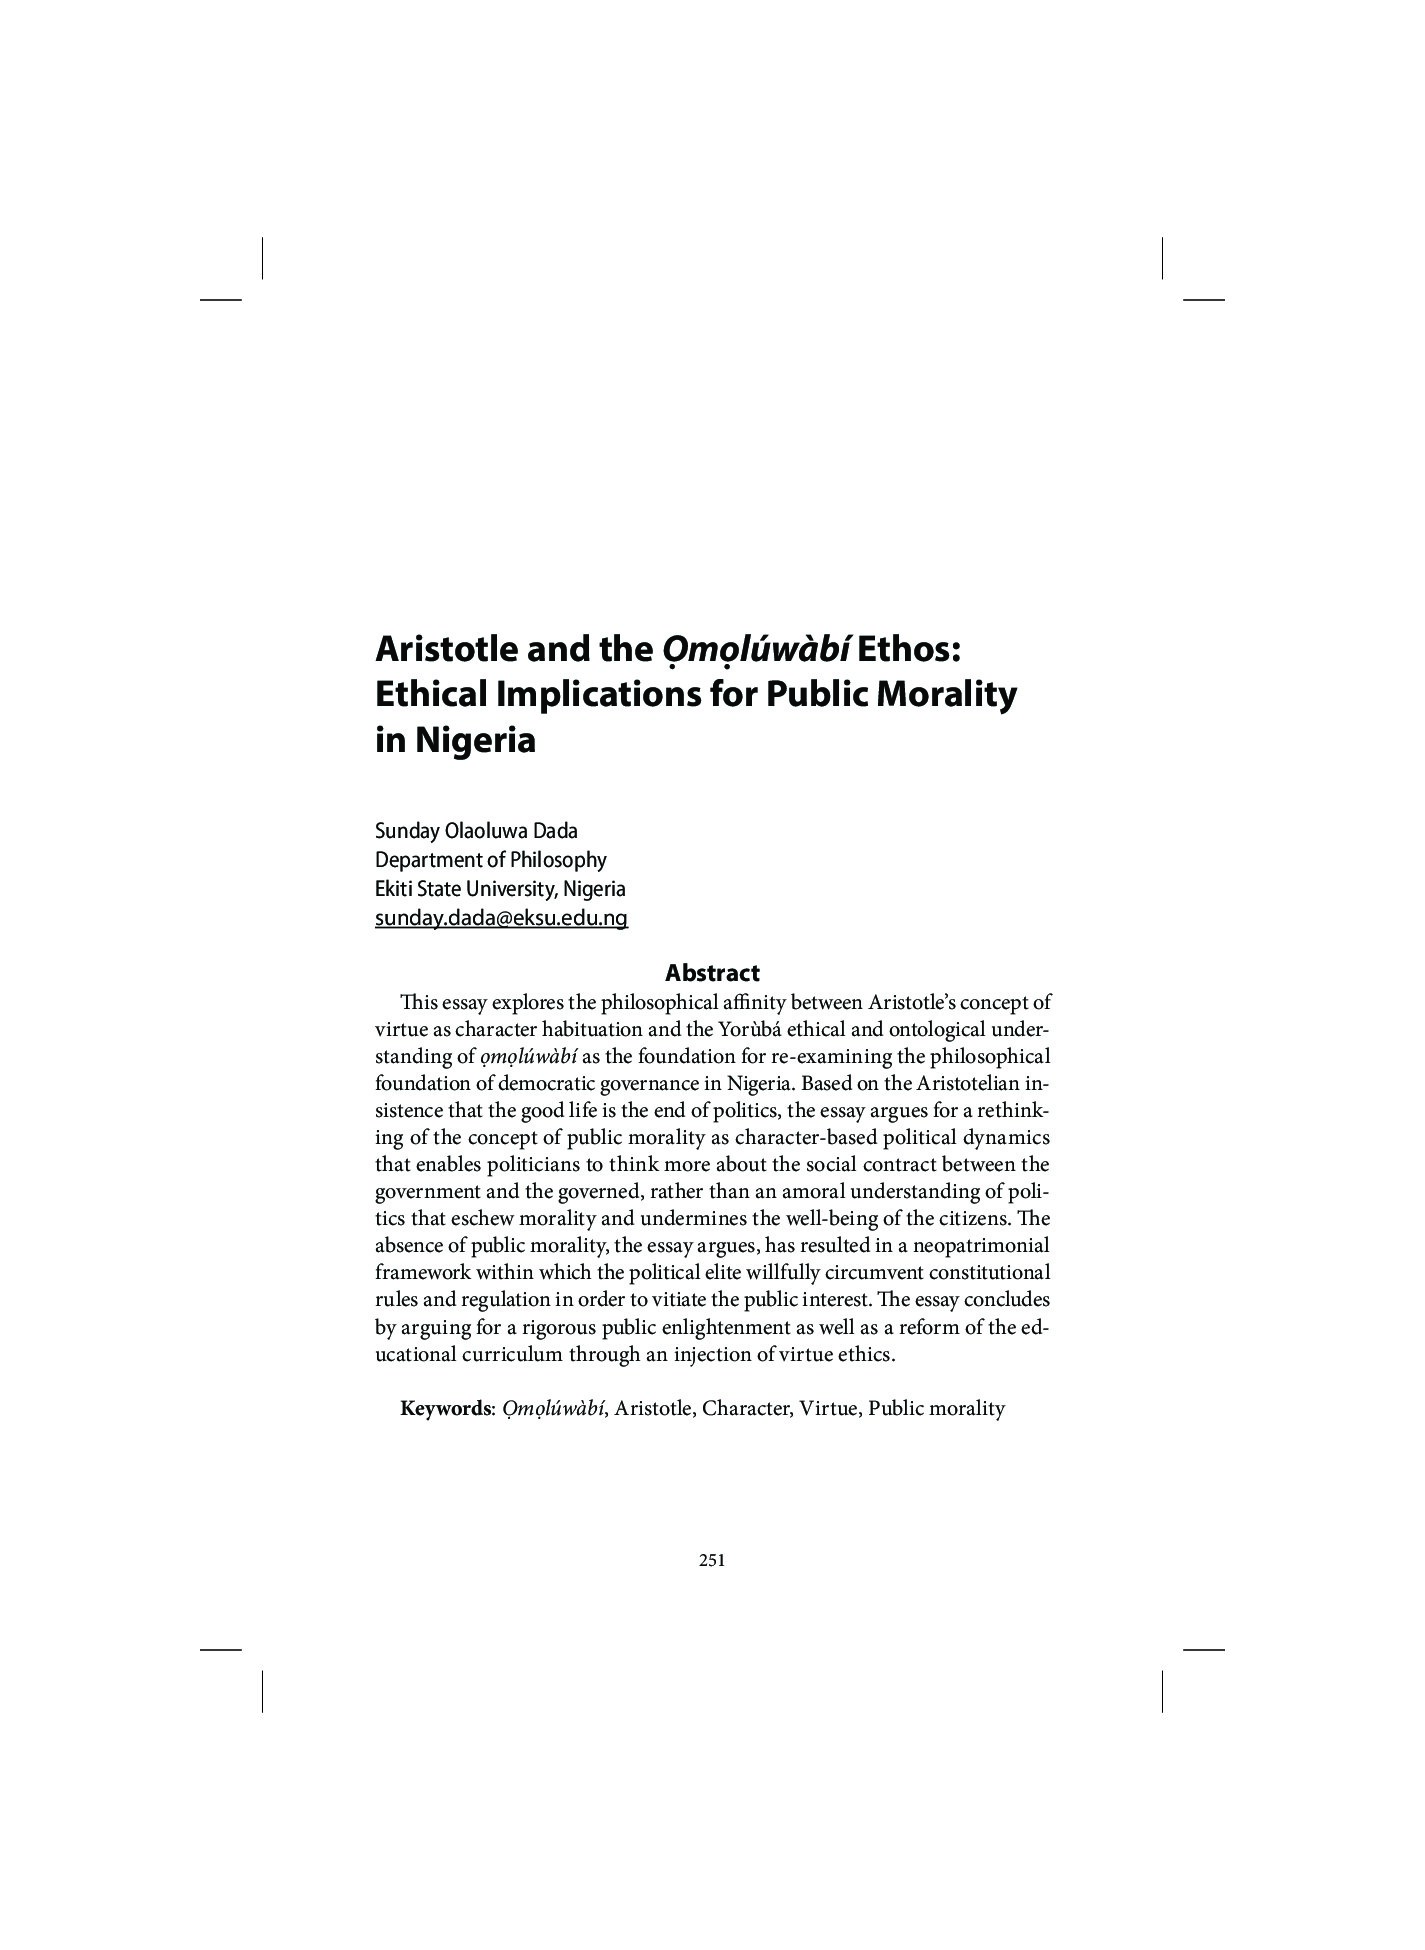 Aristotle and the Omoluwabi Ethos Ethical Implications for Public Morality in Nigeria by Sunday Olaoluwa Dada 2018